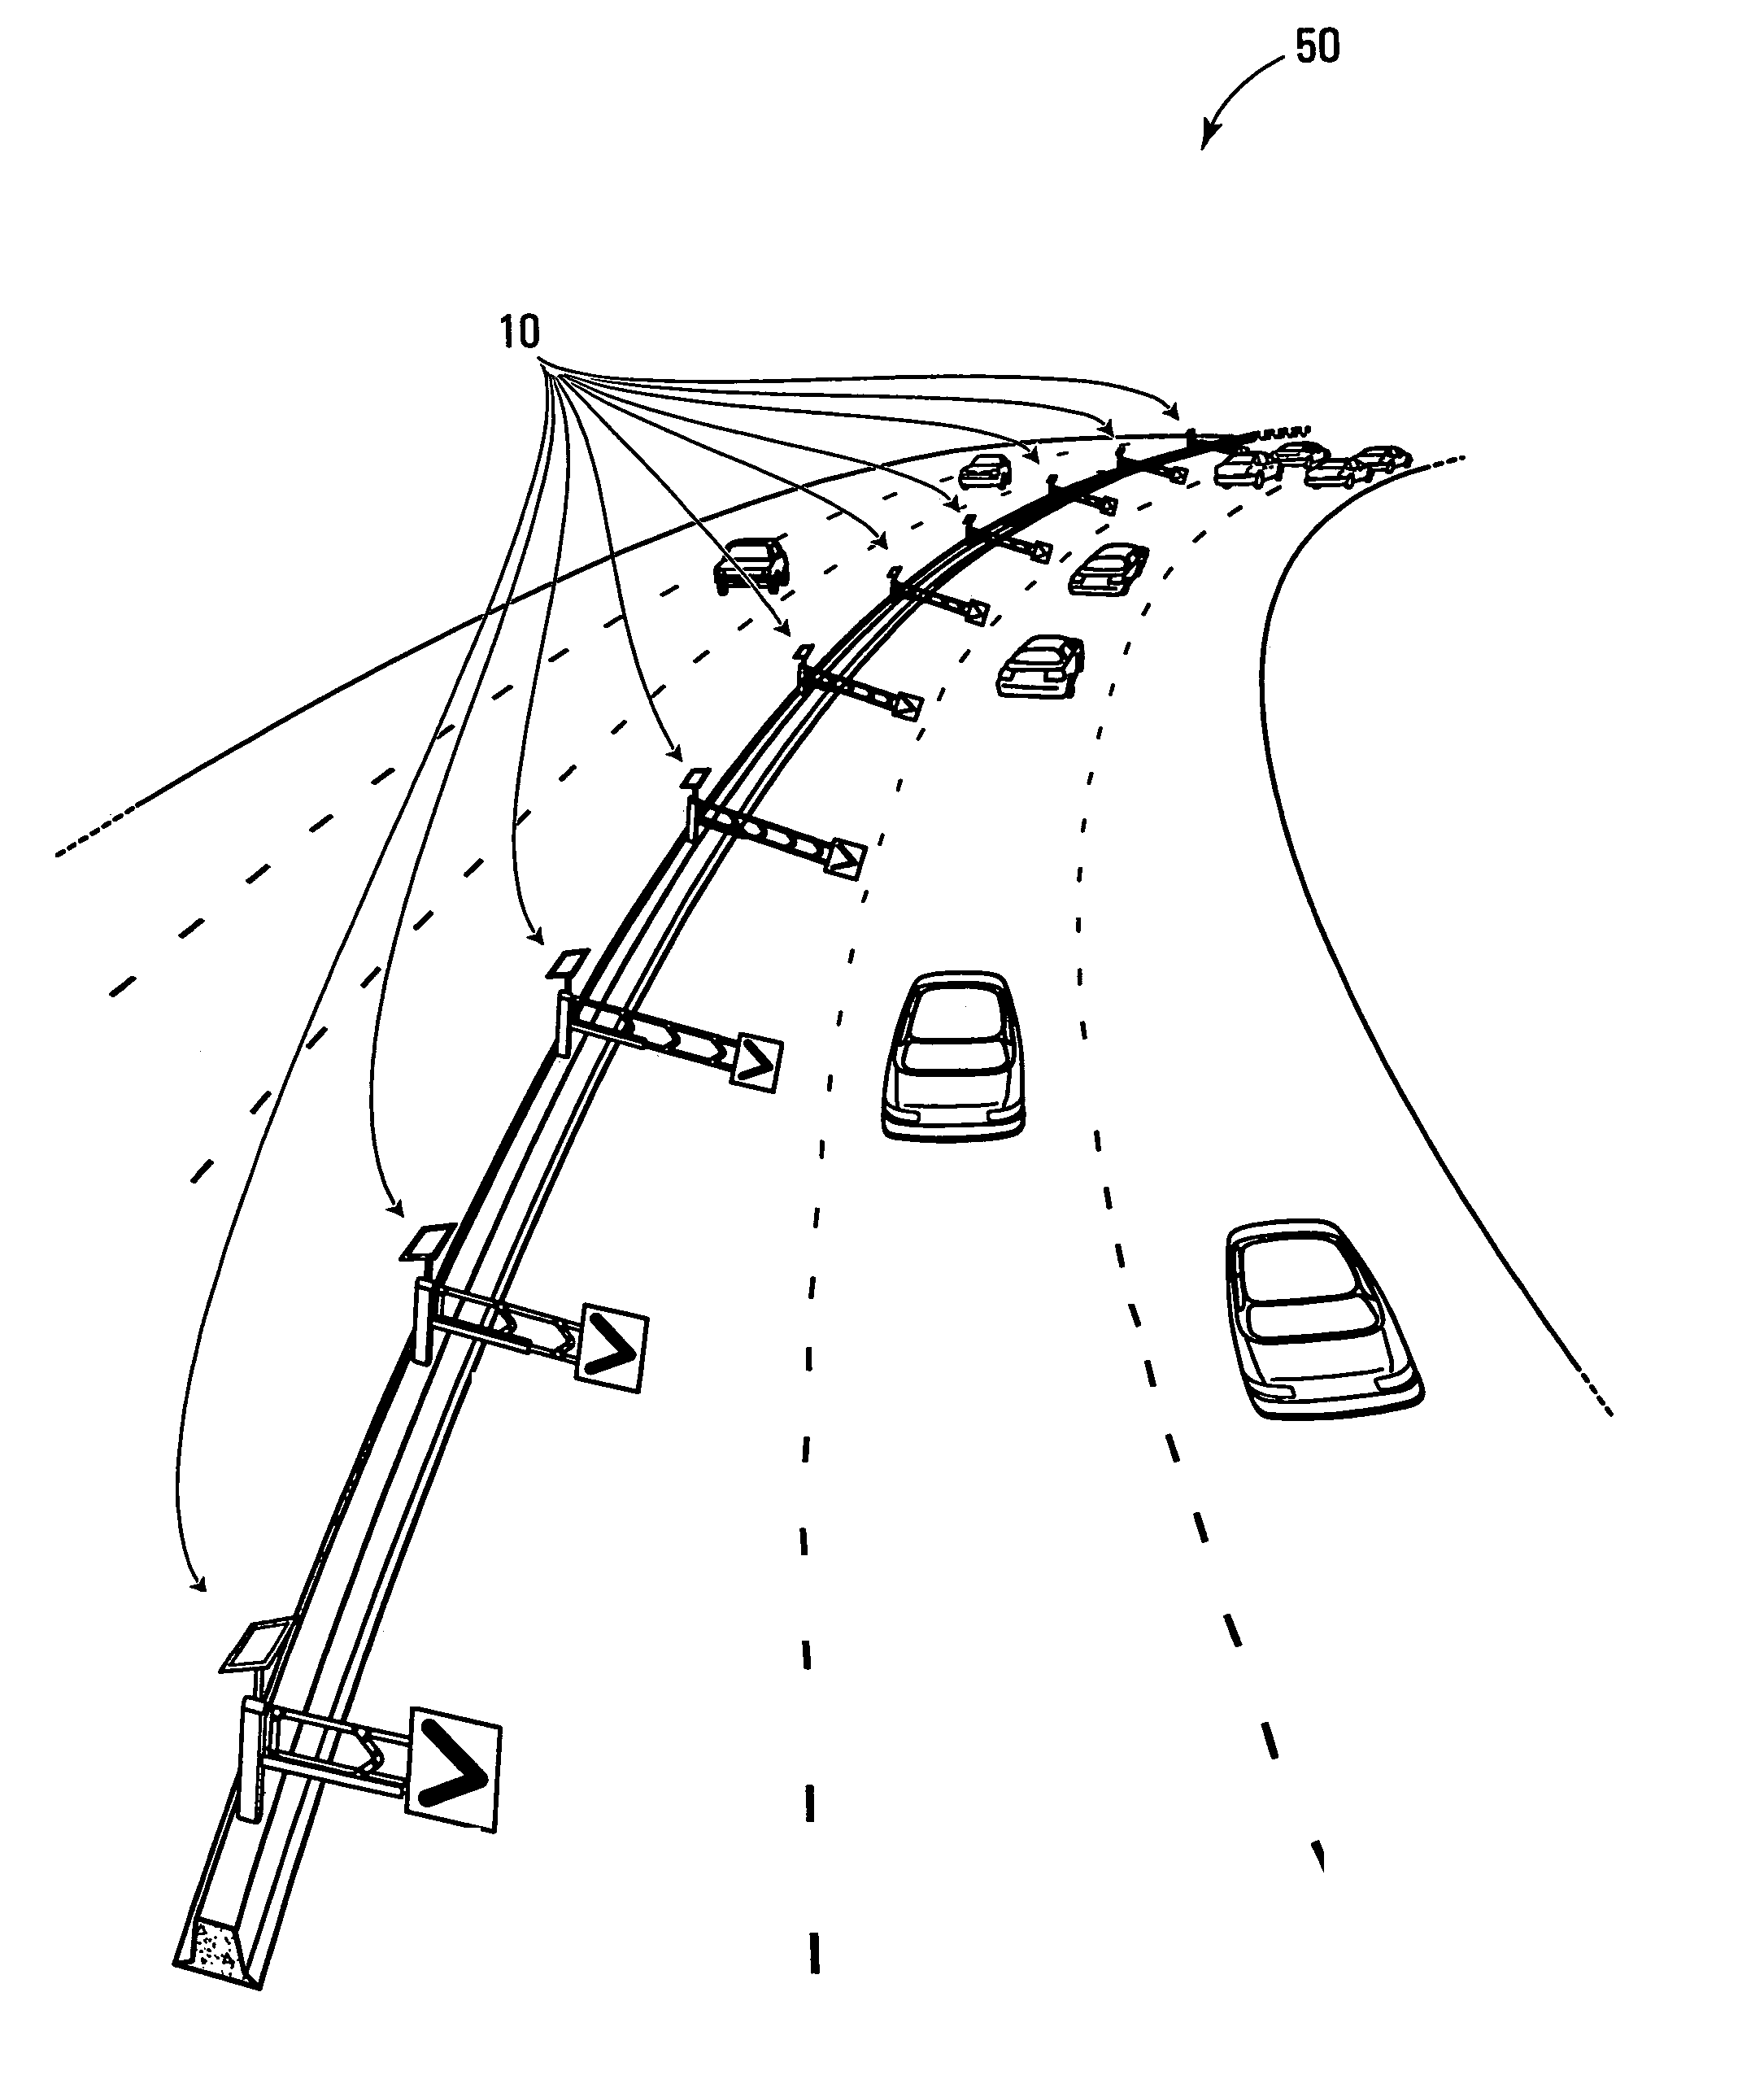 Traffic-signaling system